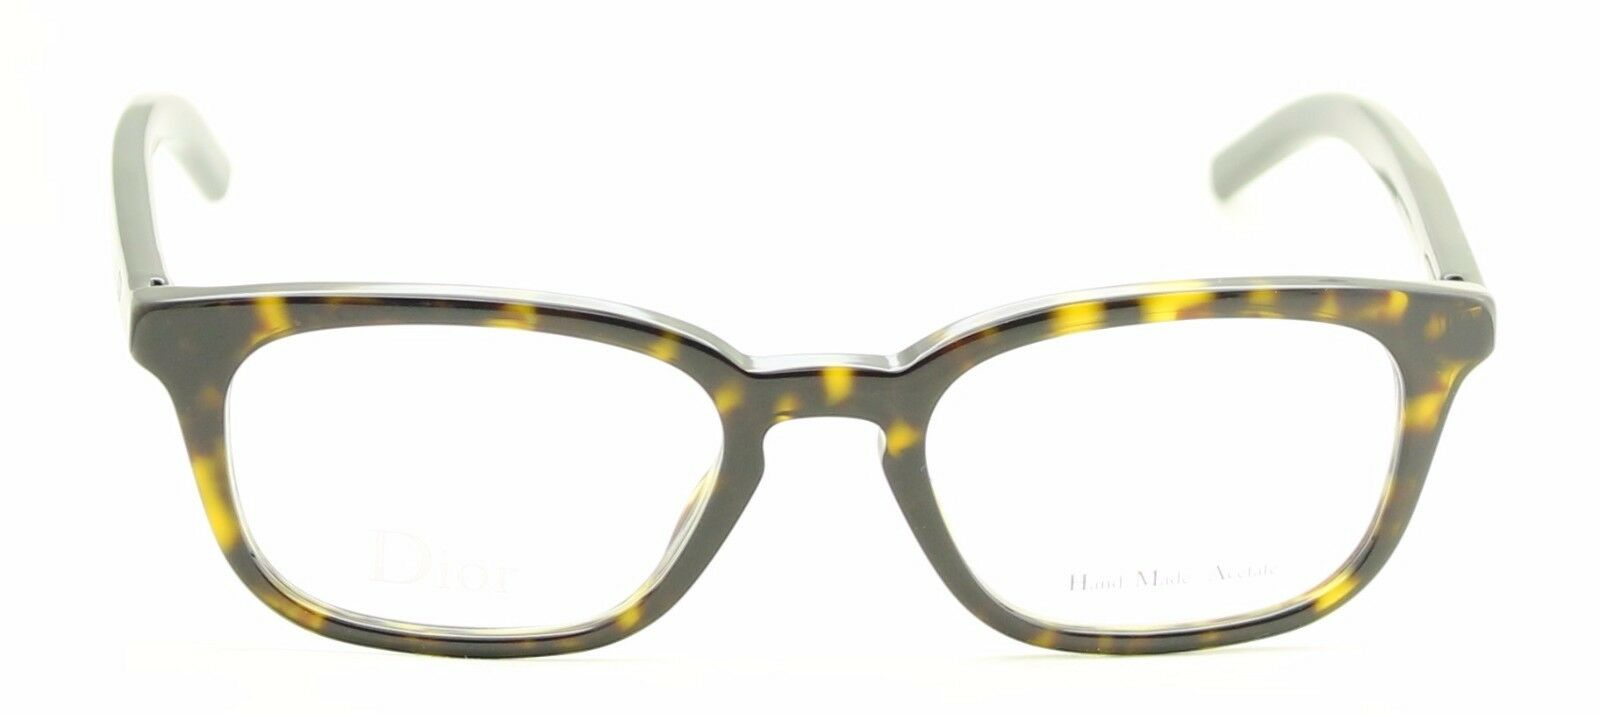 DIOR HOMME 191 TRD Eyewear Glasses RX Optical Eyeglasses FRAMES BNIB New - ITALY